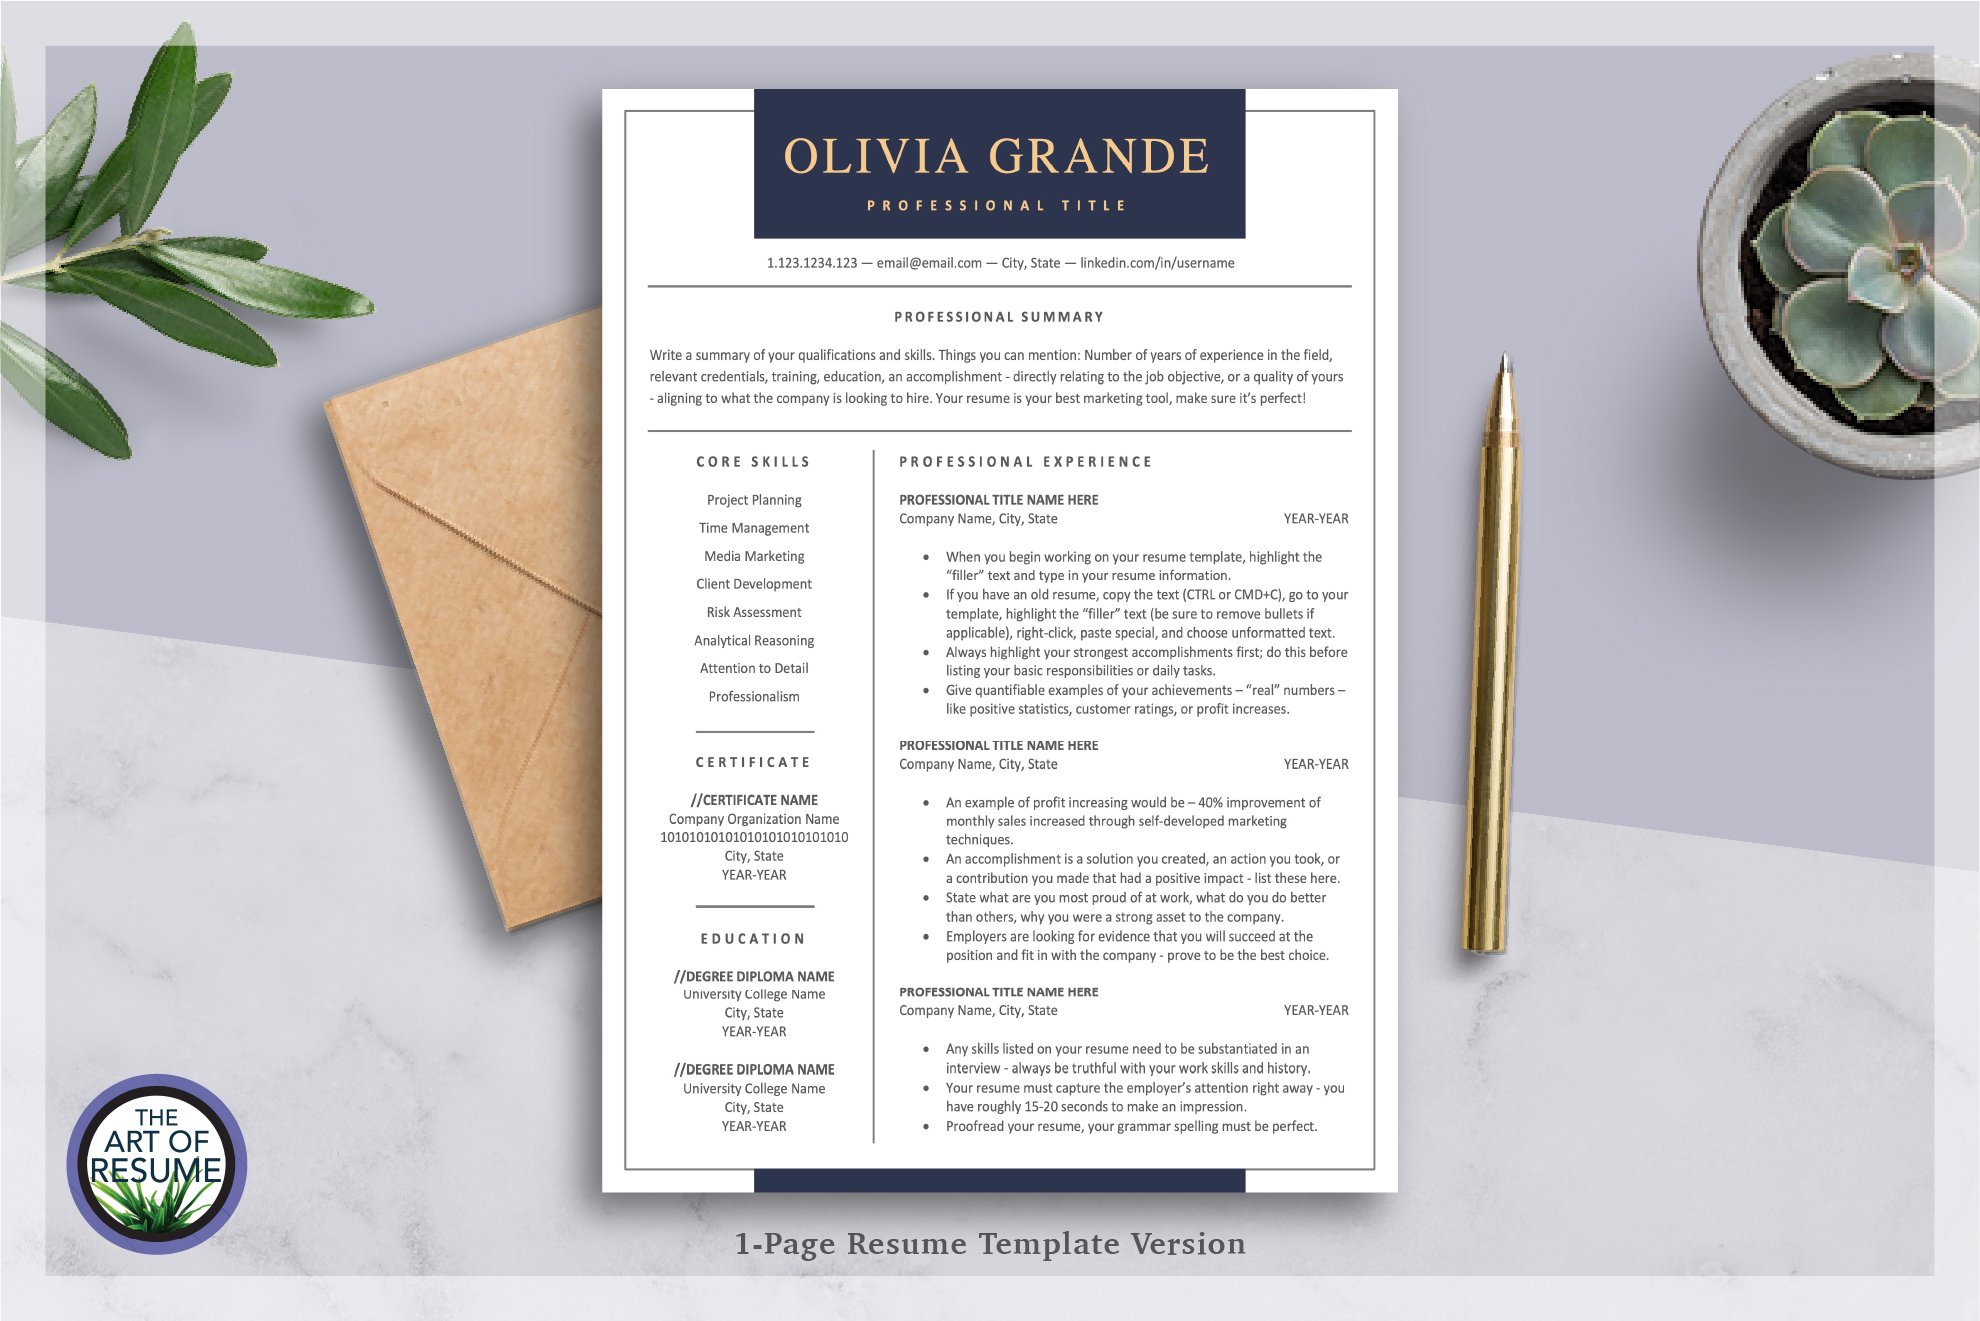 Editable Resume CV Template Design preview image.